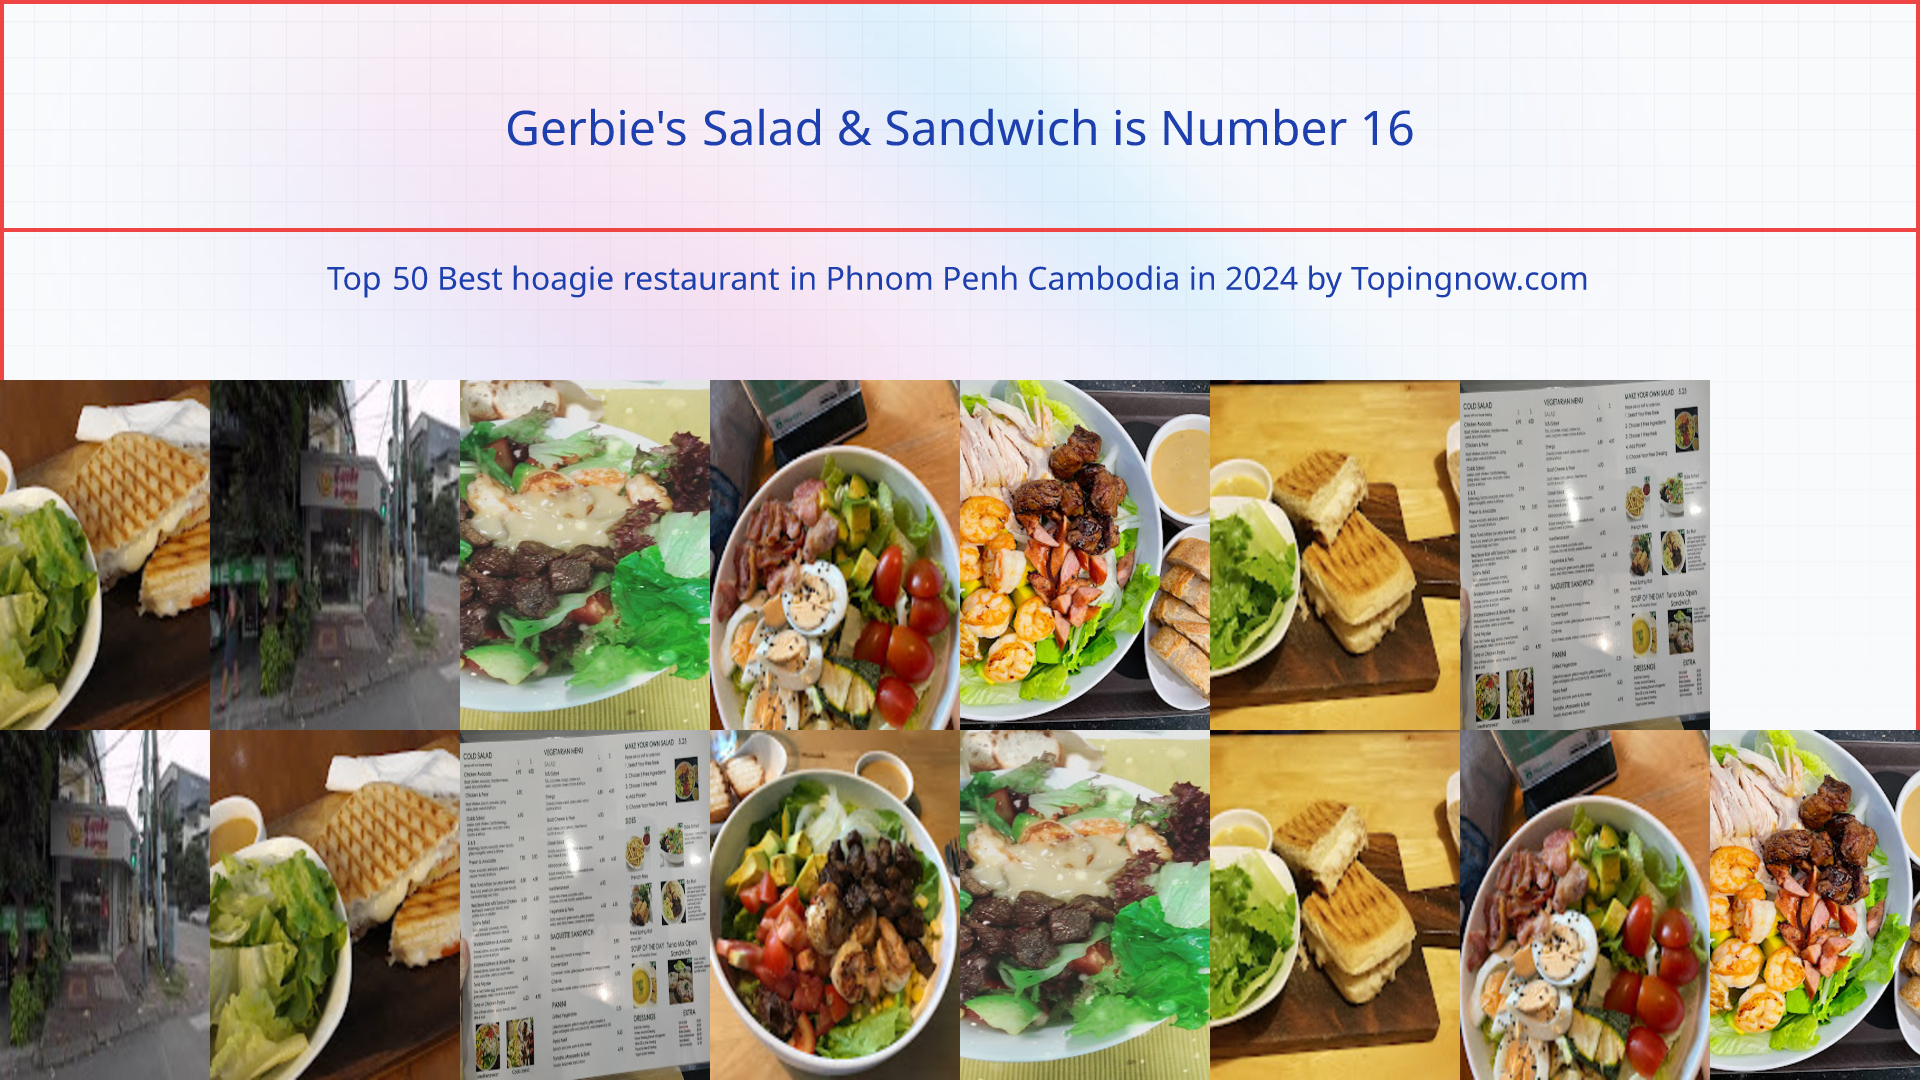 Gerbie's Salad & Sandwich: Top 50 Best hoagie restaurant in Phnom Penh Cambodia in 2024